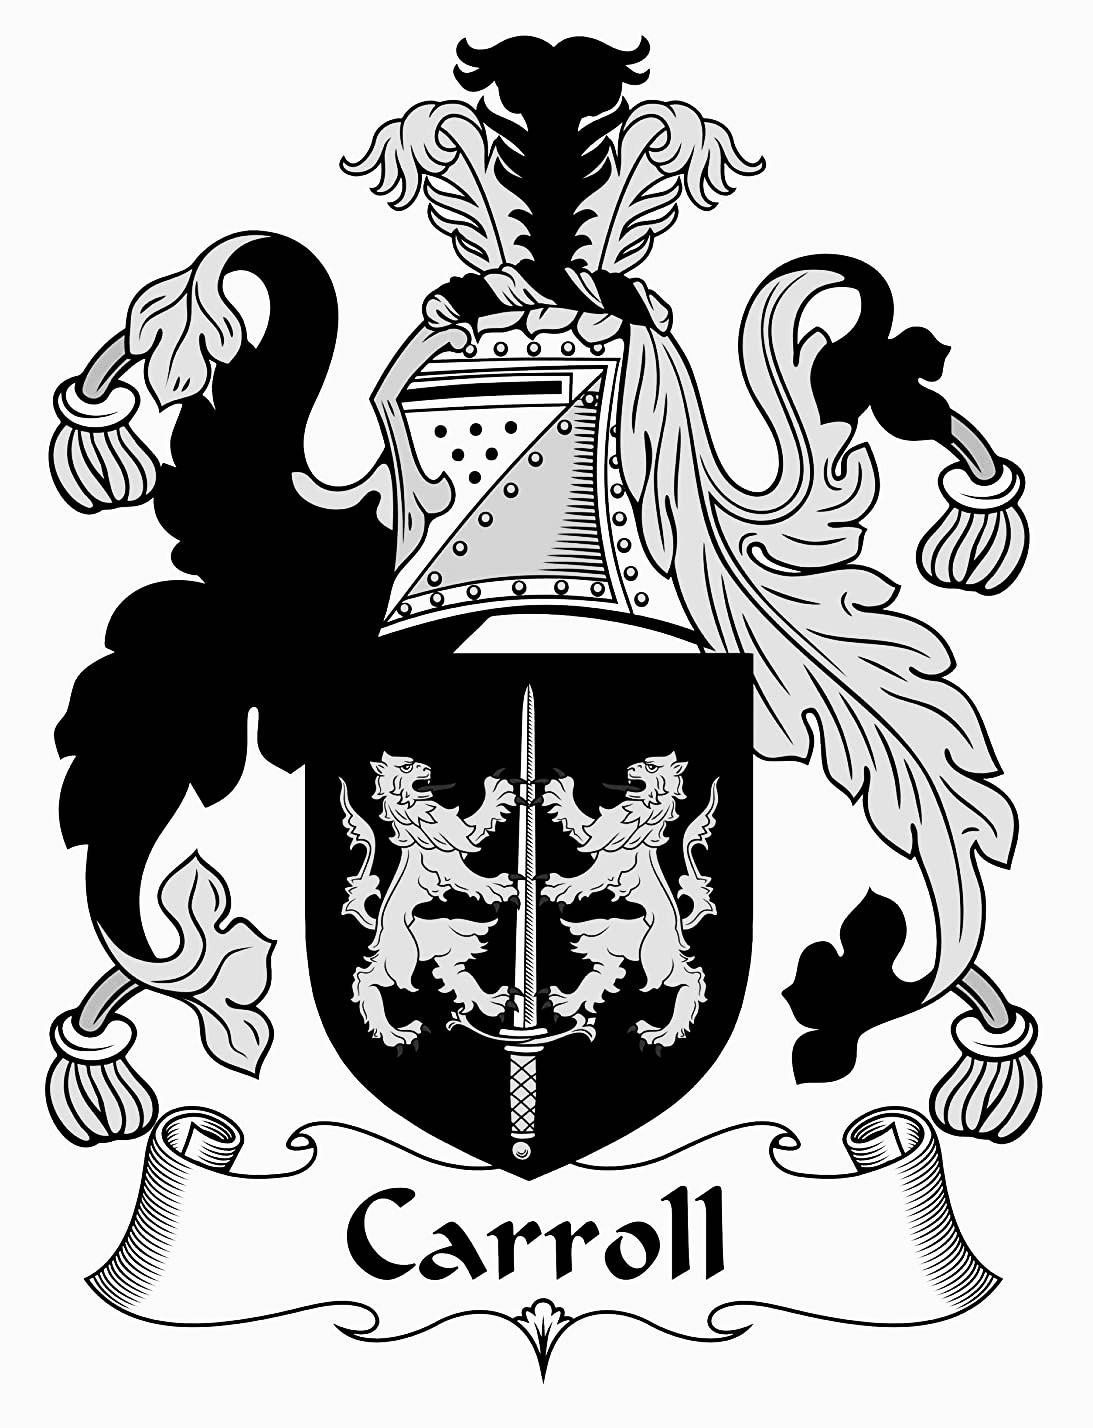 R. Patrick Carroll III Services Logo